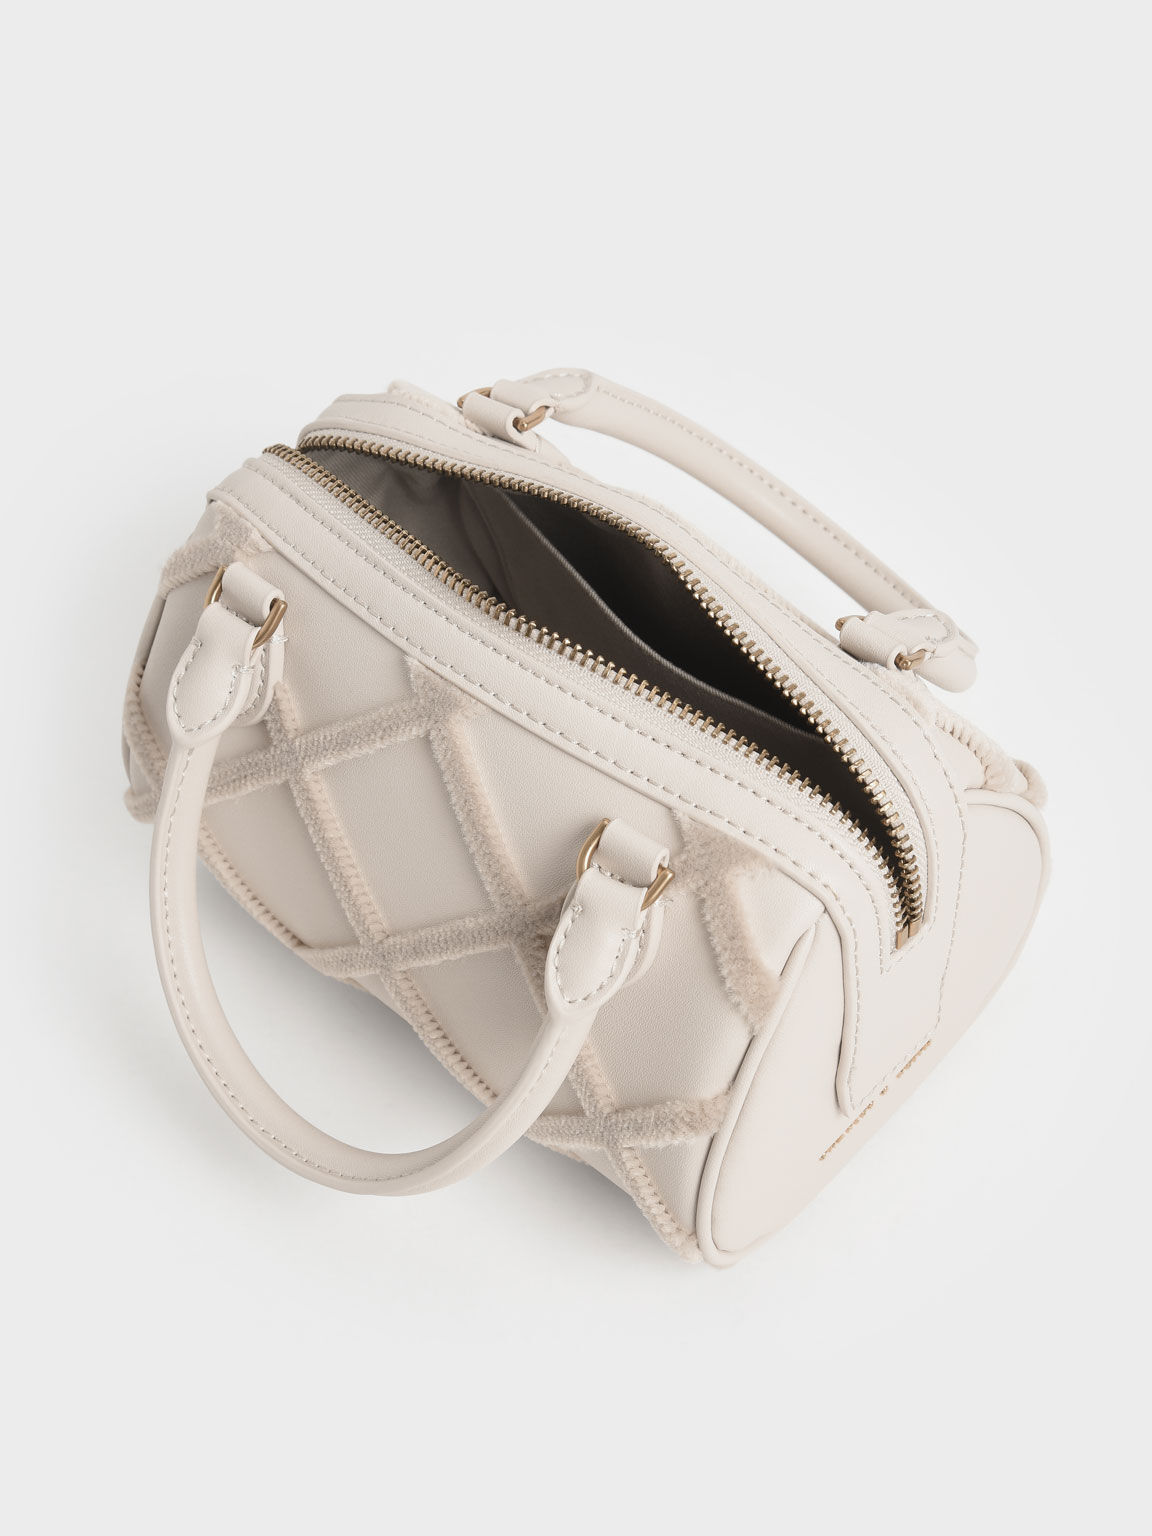 Cleo Criss-Cross Pattern Top Handle Bag, Ivory, hi-res